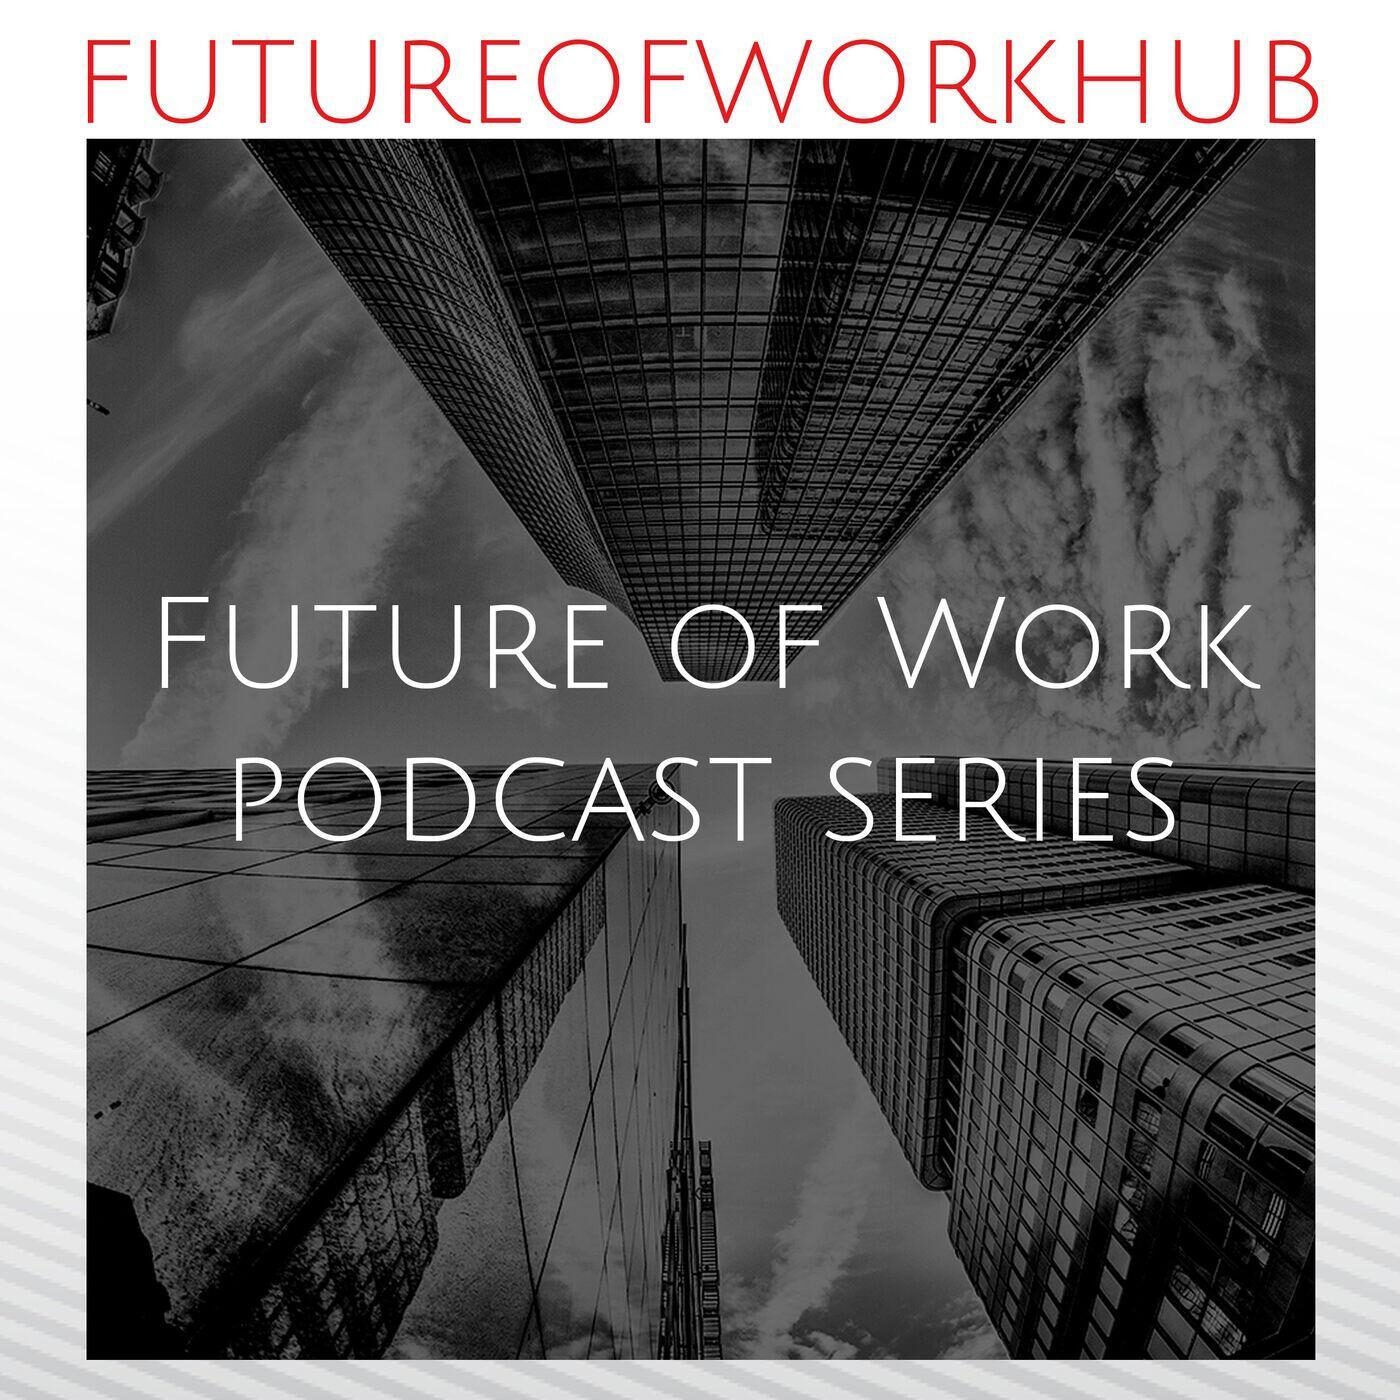 future of work hub